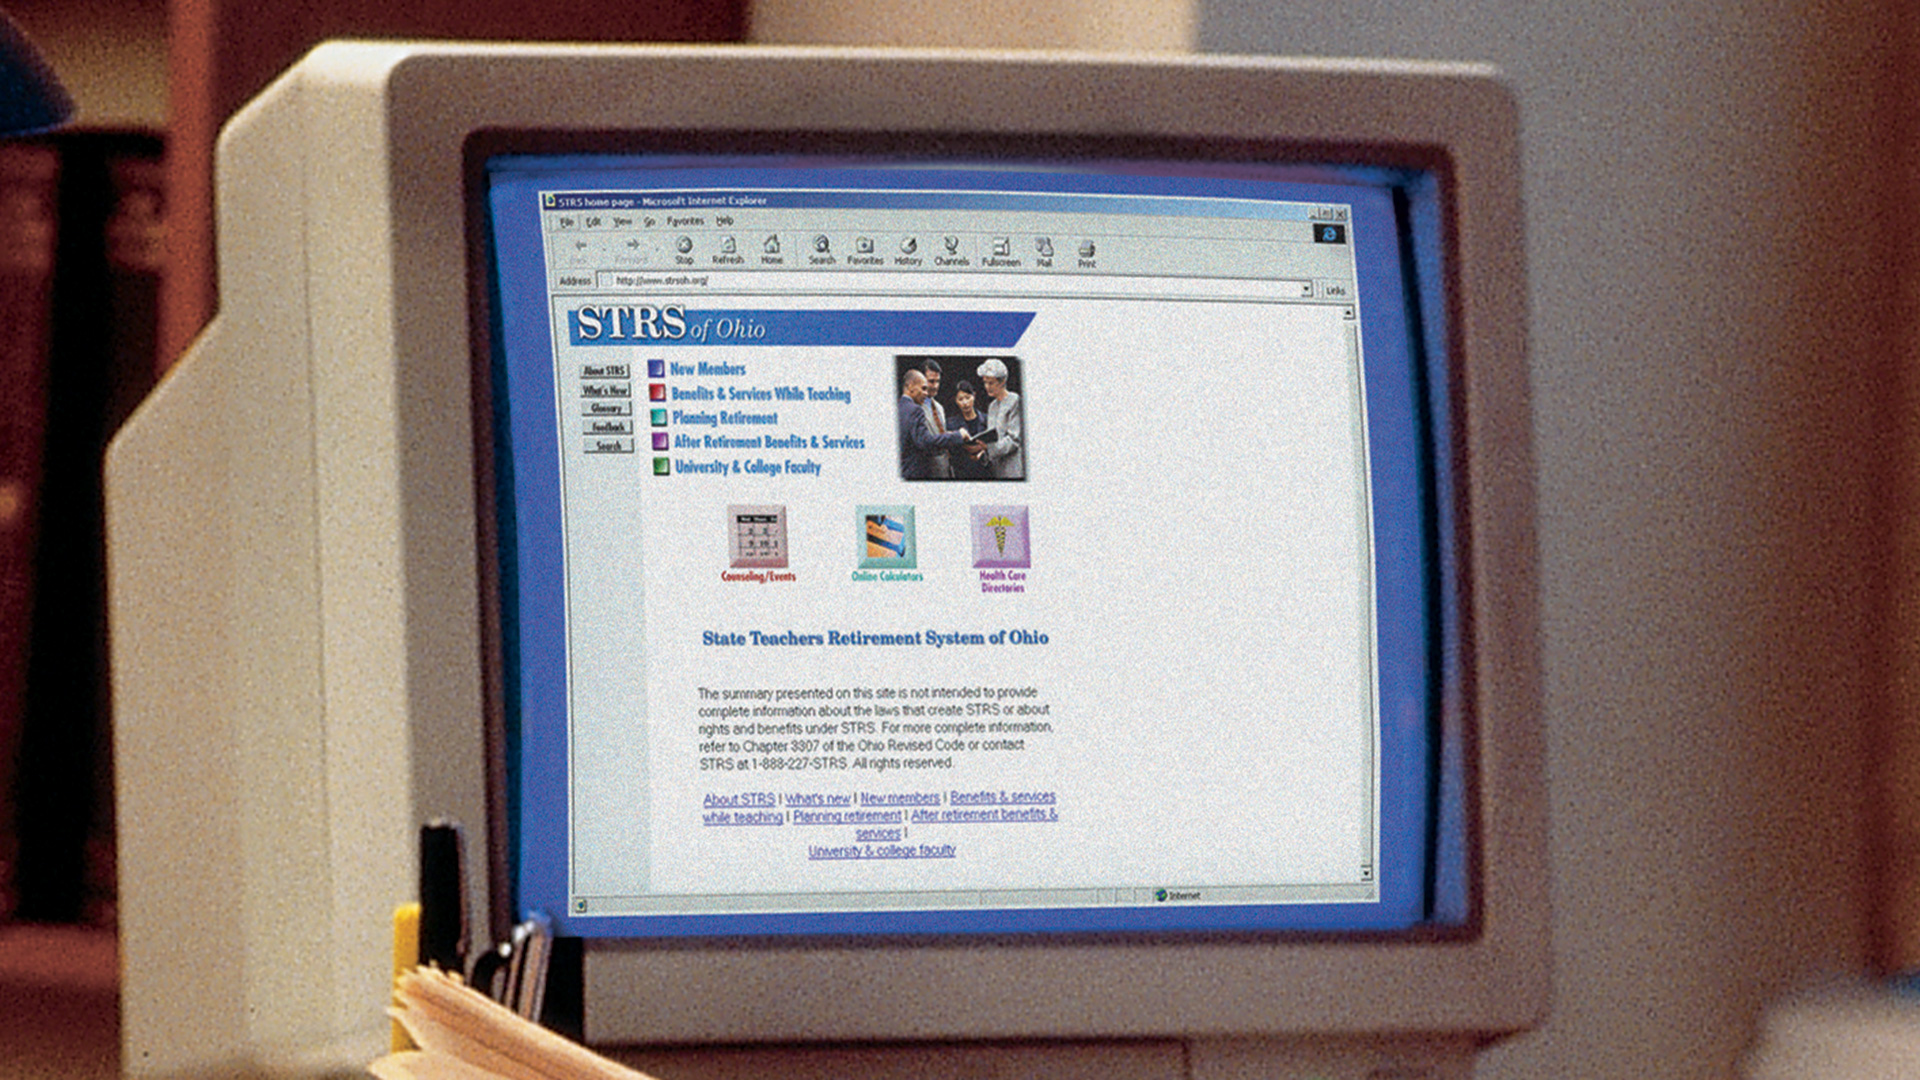 STRS Ohio website in 1997